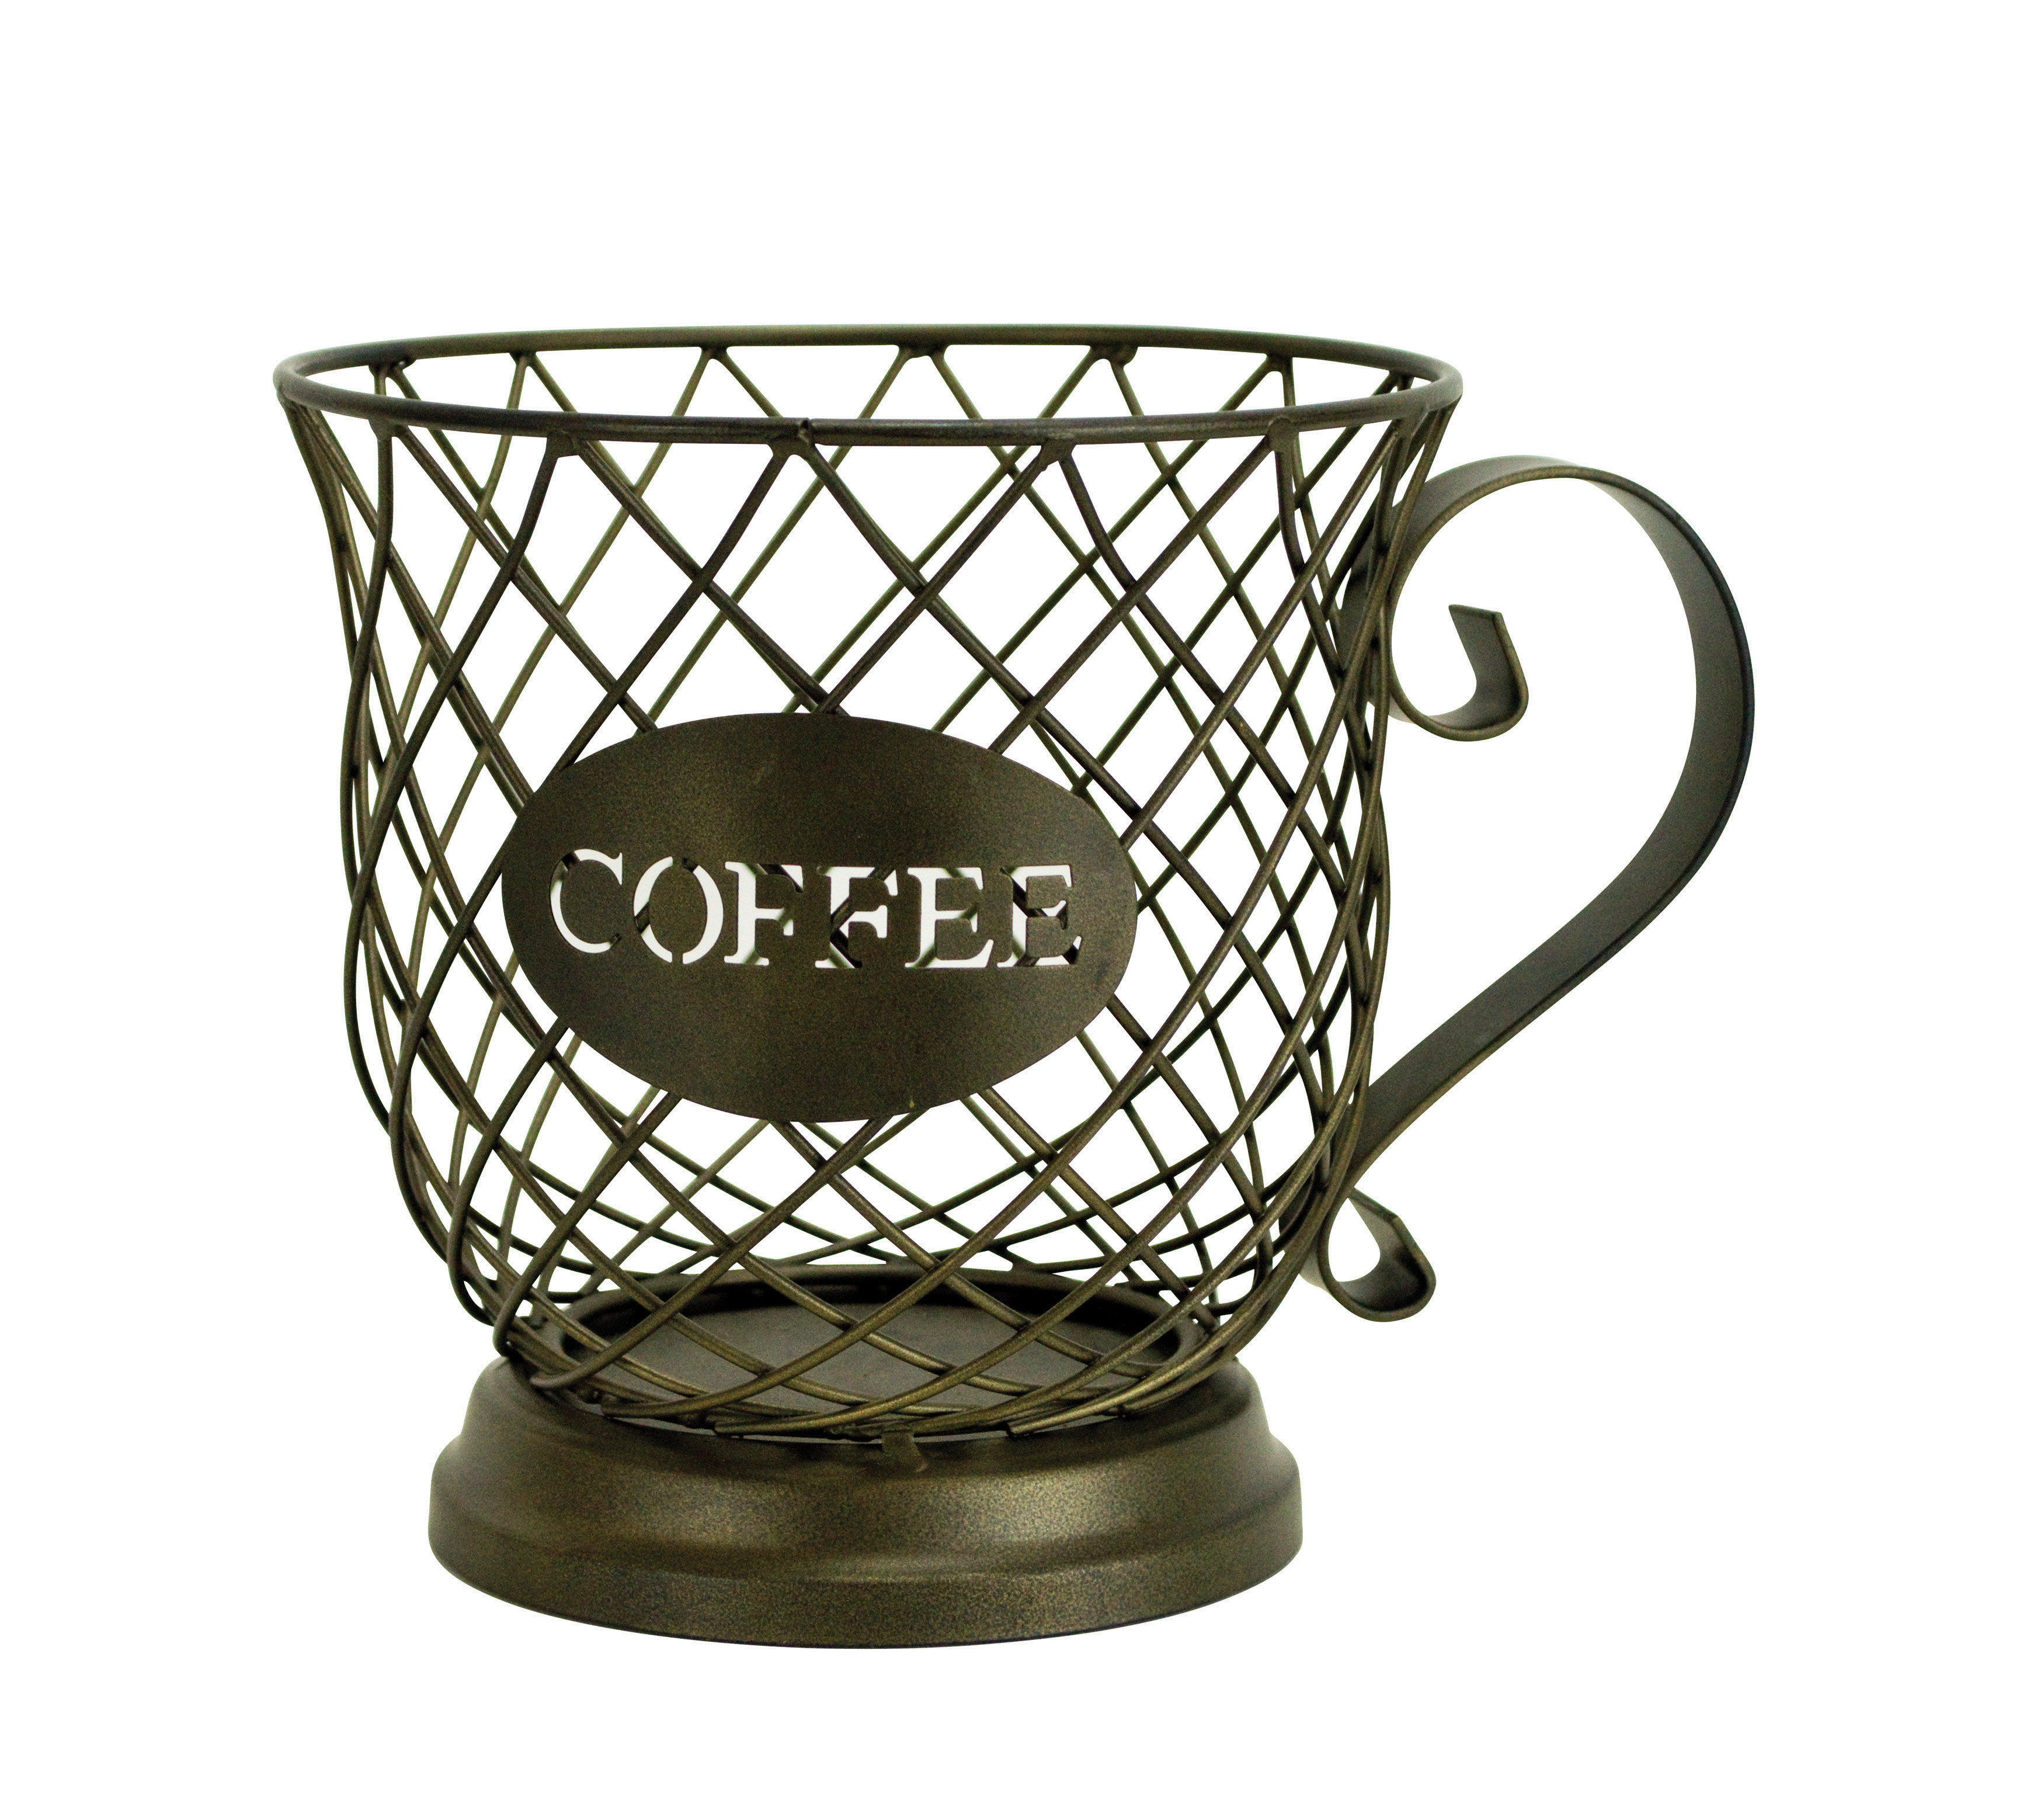 12 High-End Coffee Accessories - Boston Magazine